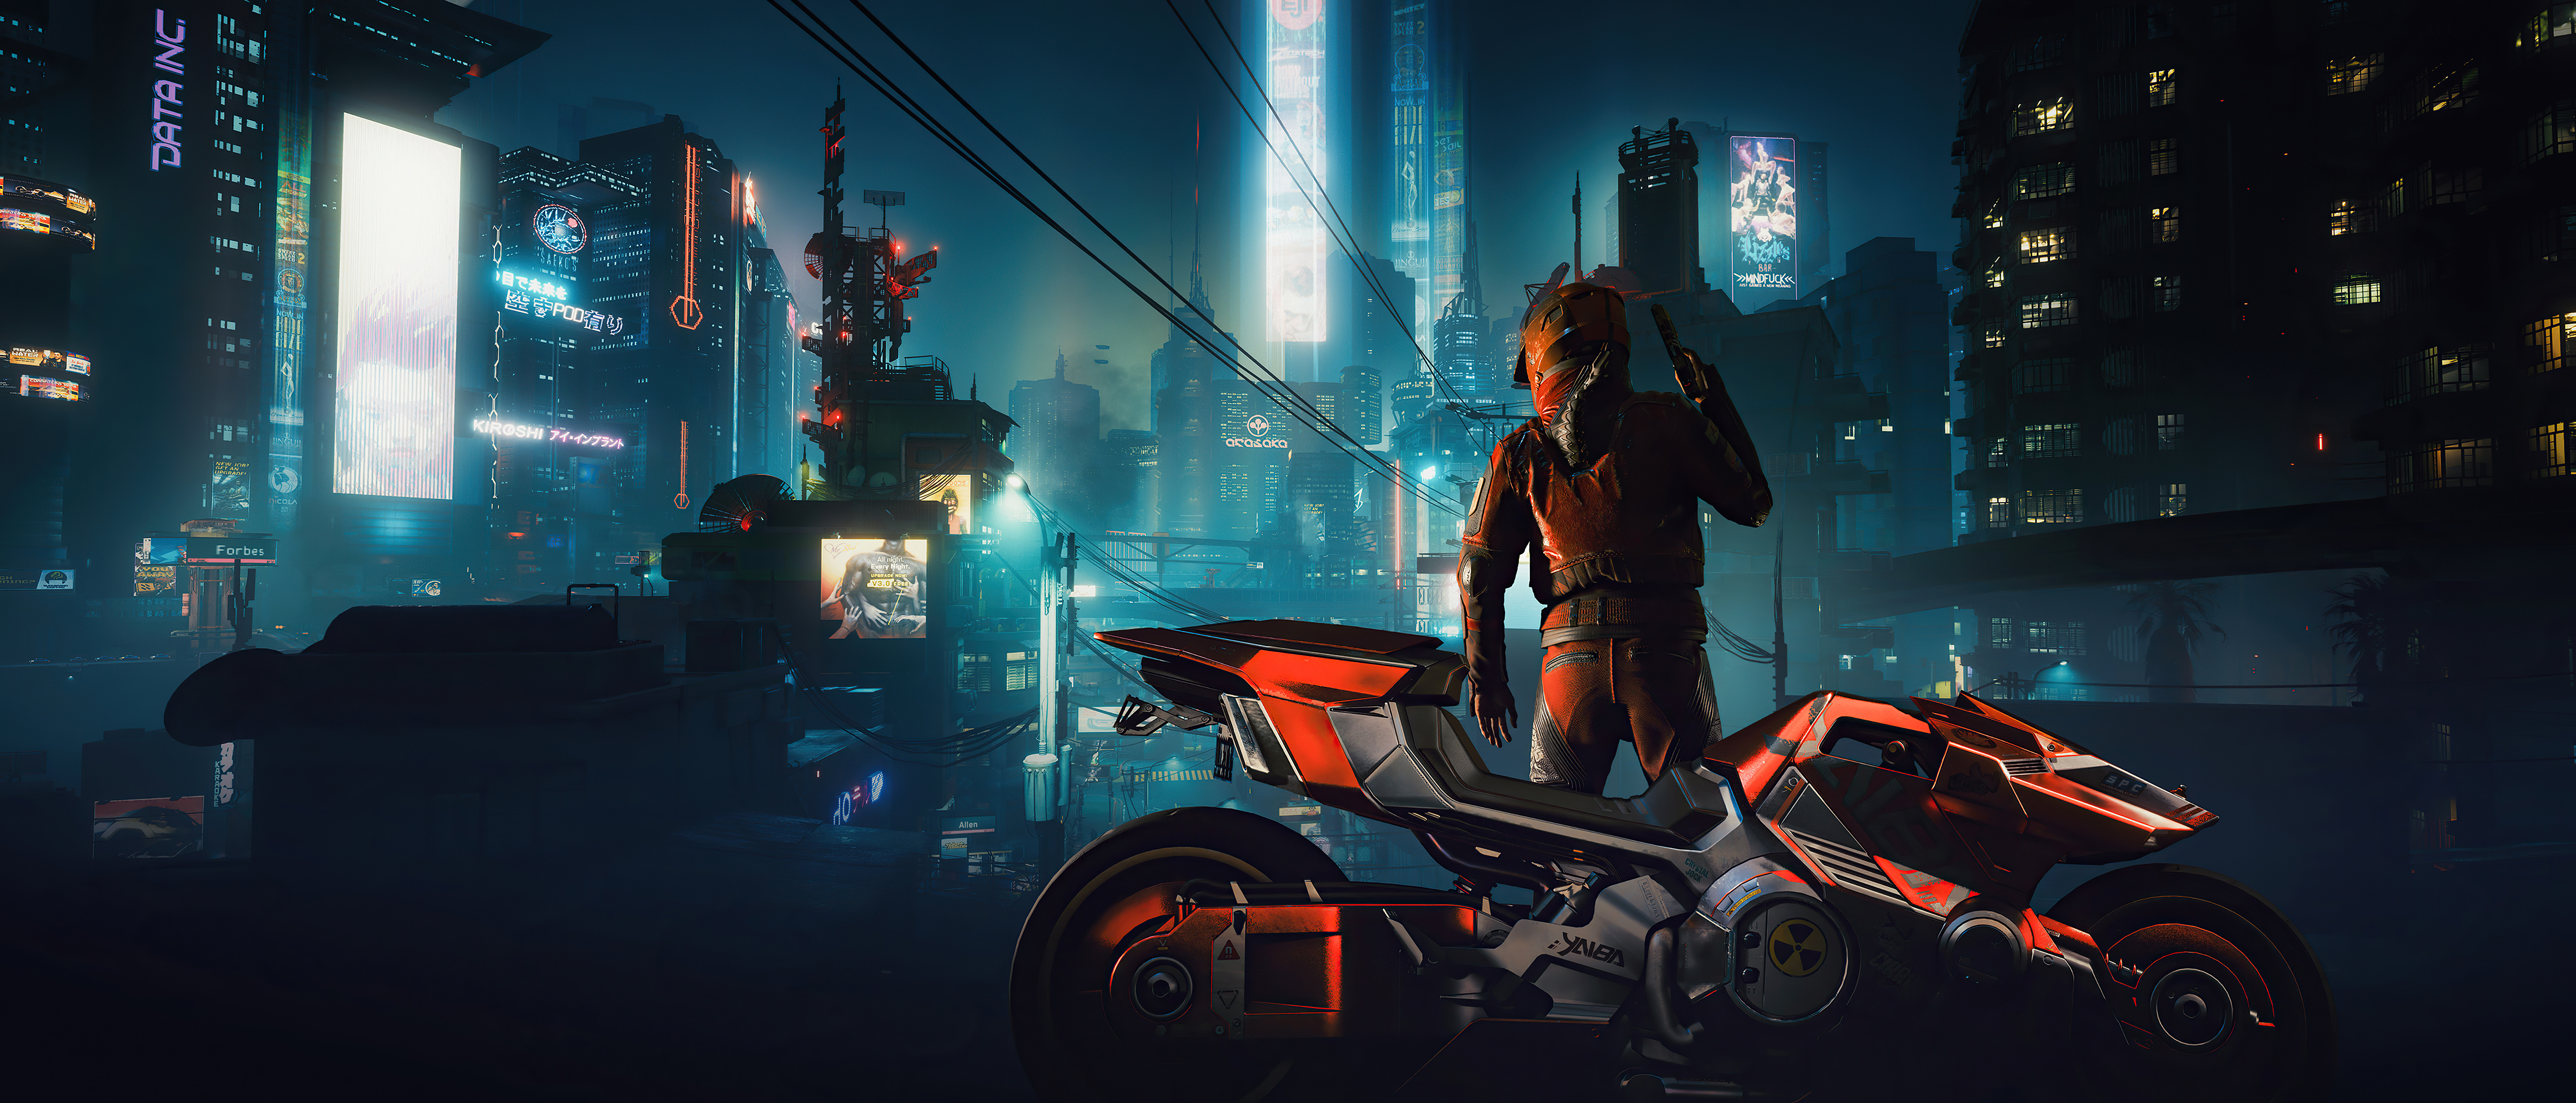 Biker Republic Of Gamers Gun Video Games Motorcycle City City Lights Night Cyberpunk 2077 CD Projekt 5120x2193